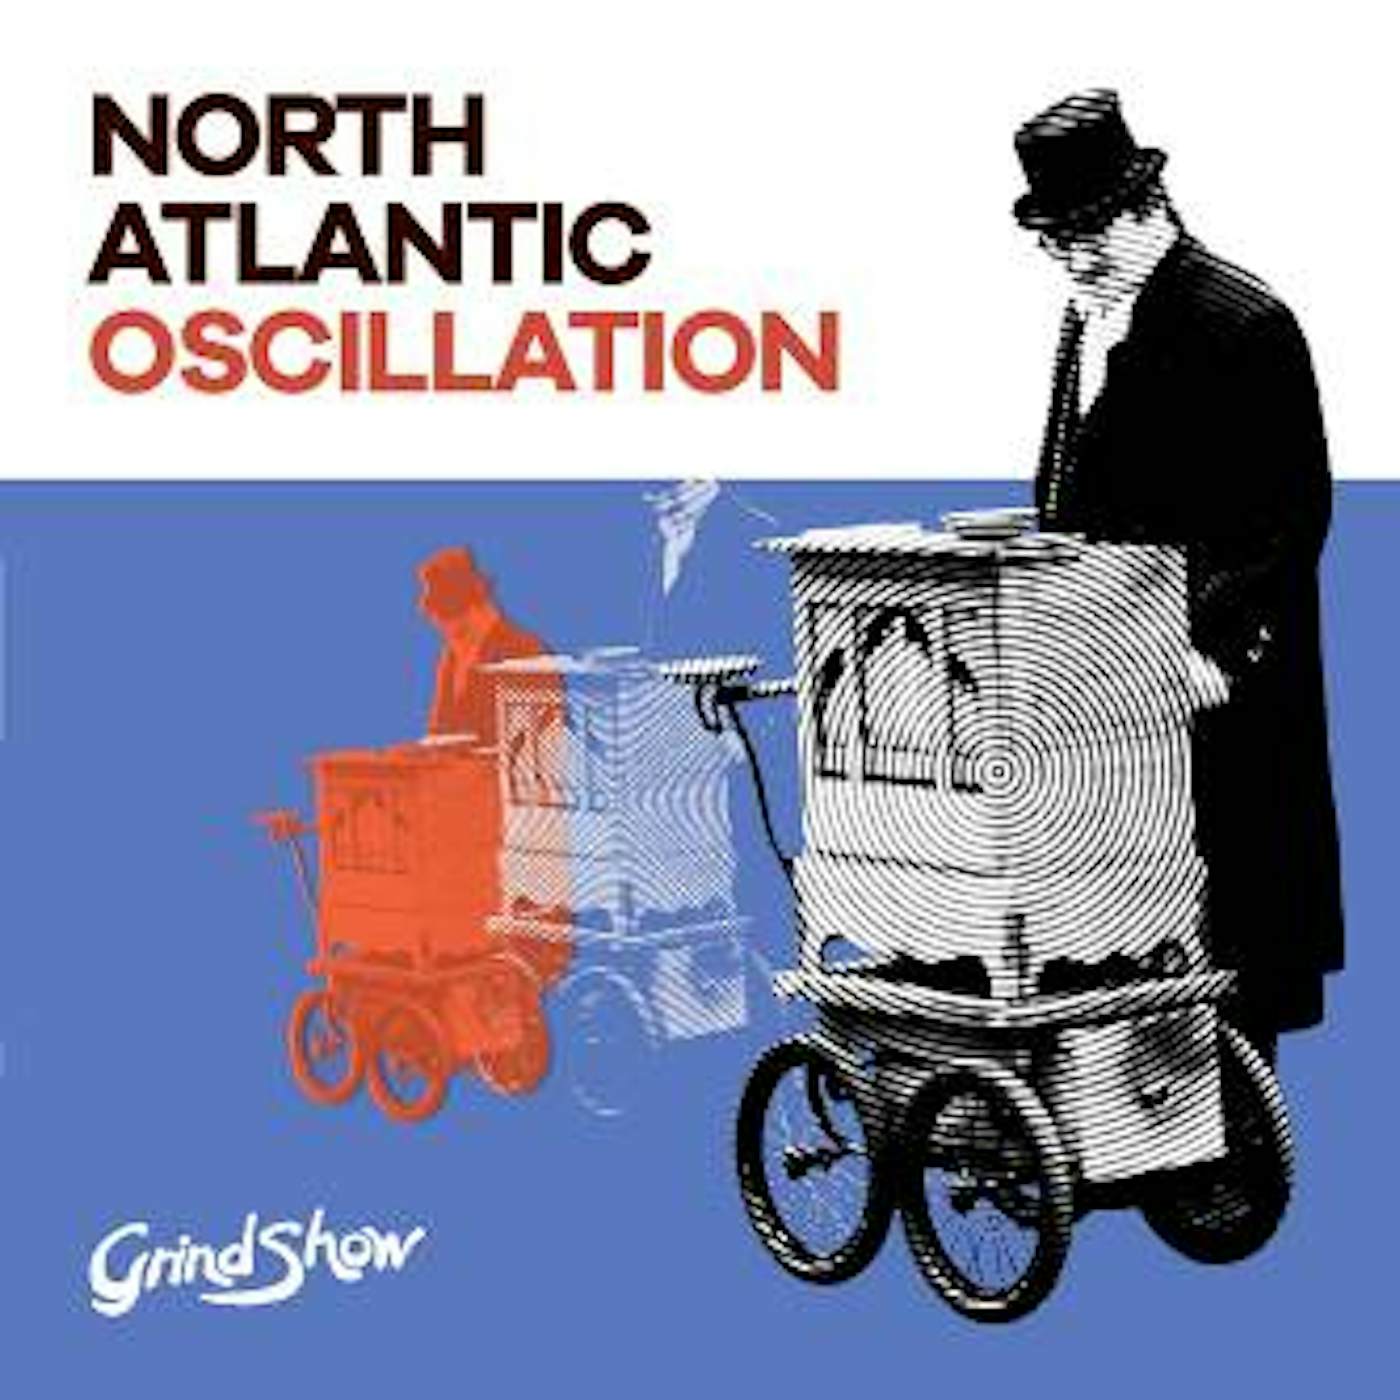 North Atlantic Oscillation Grind Show Vinyl Record